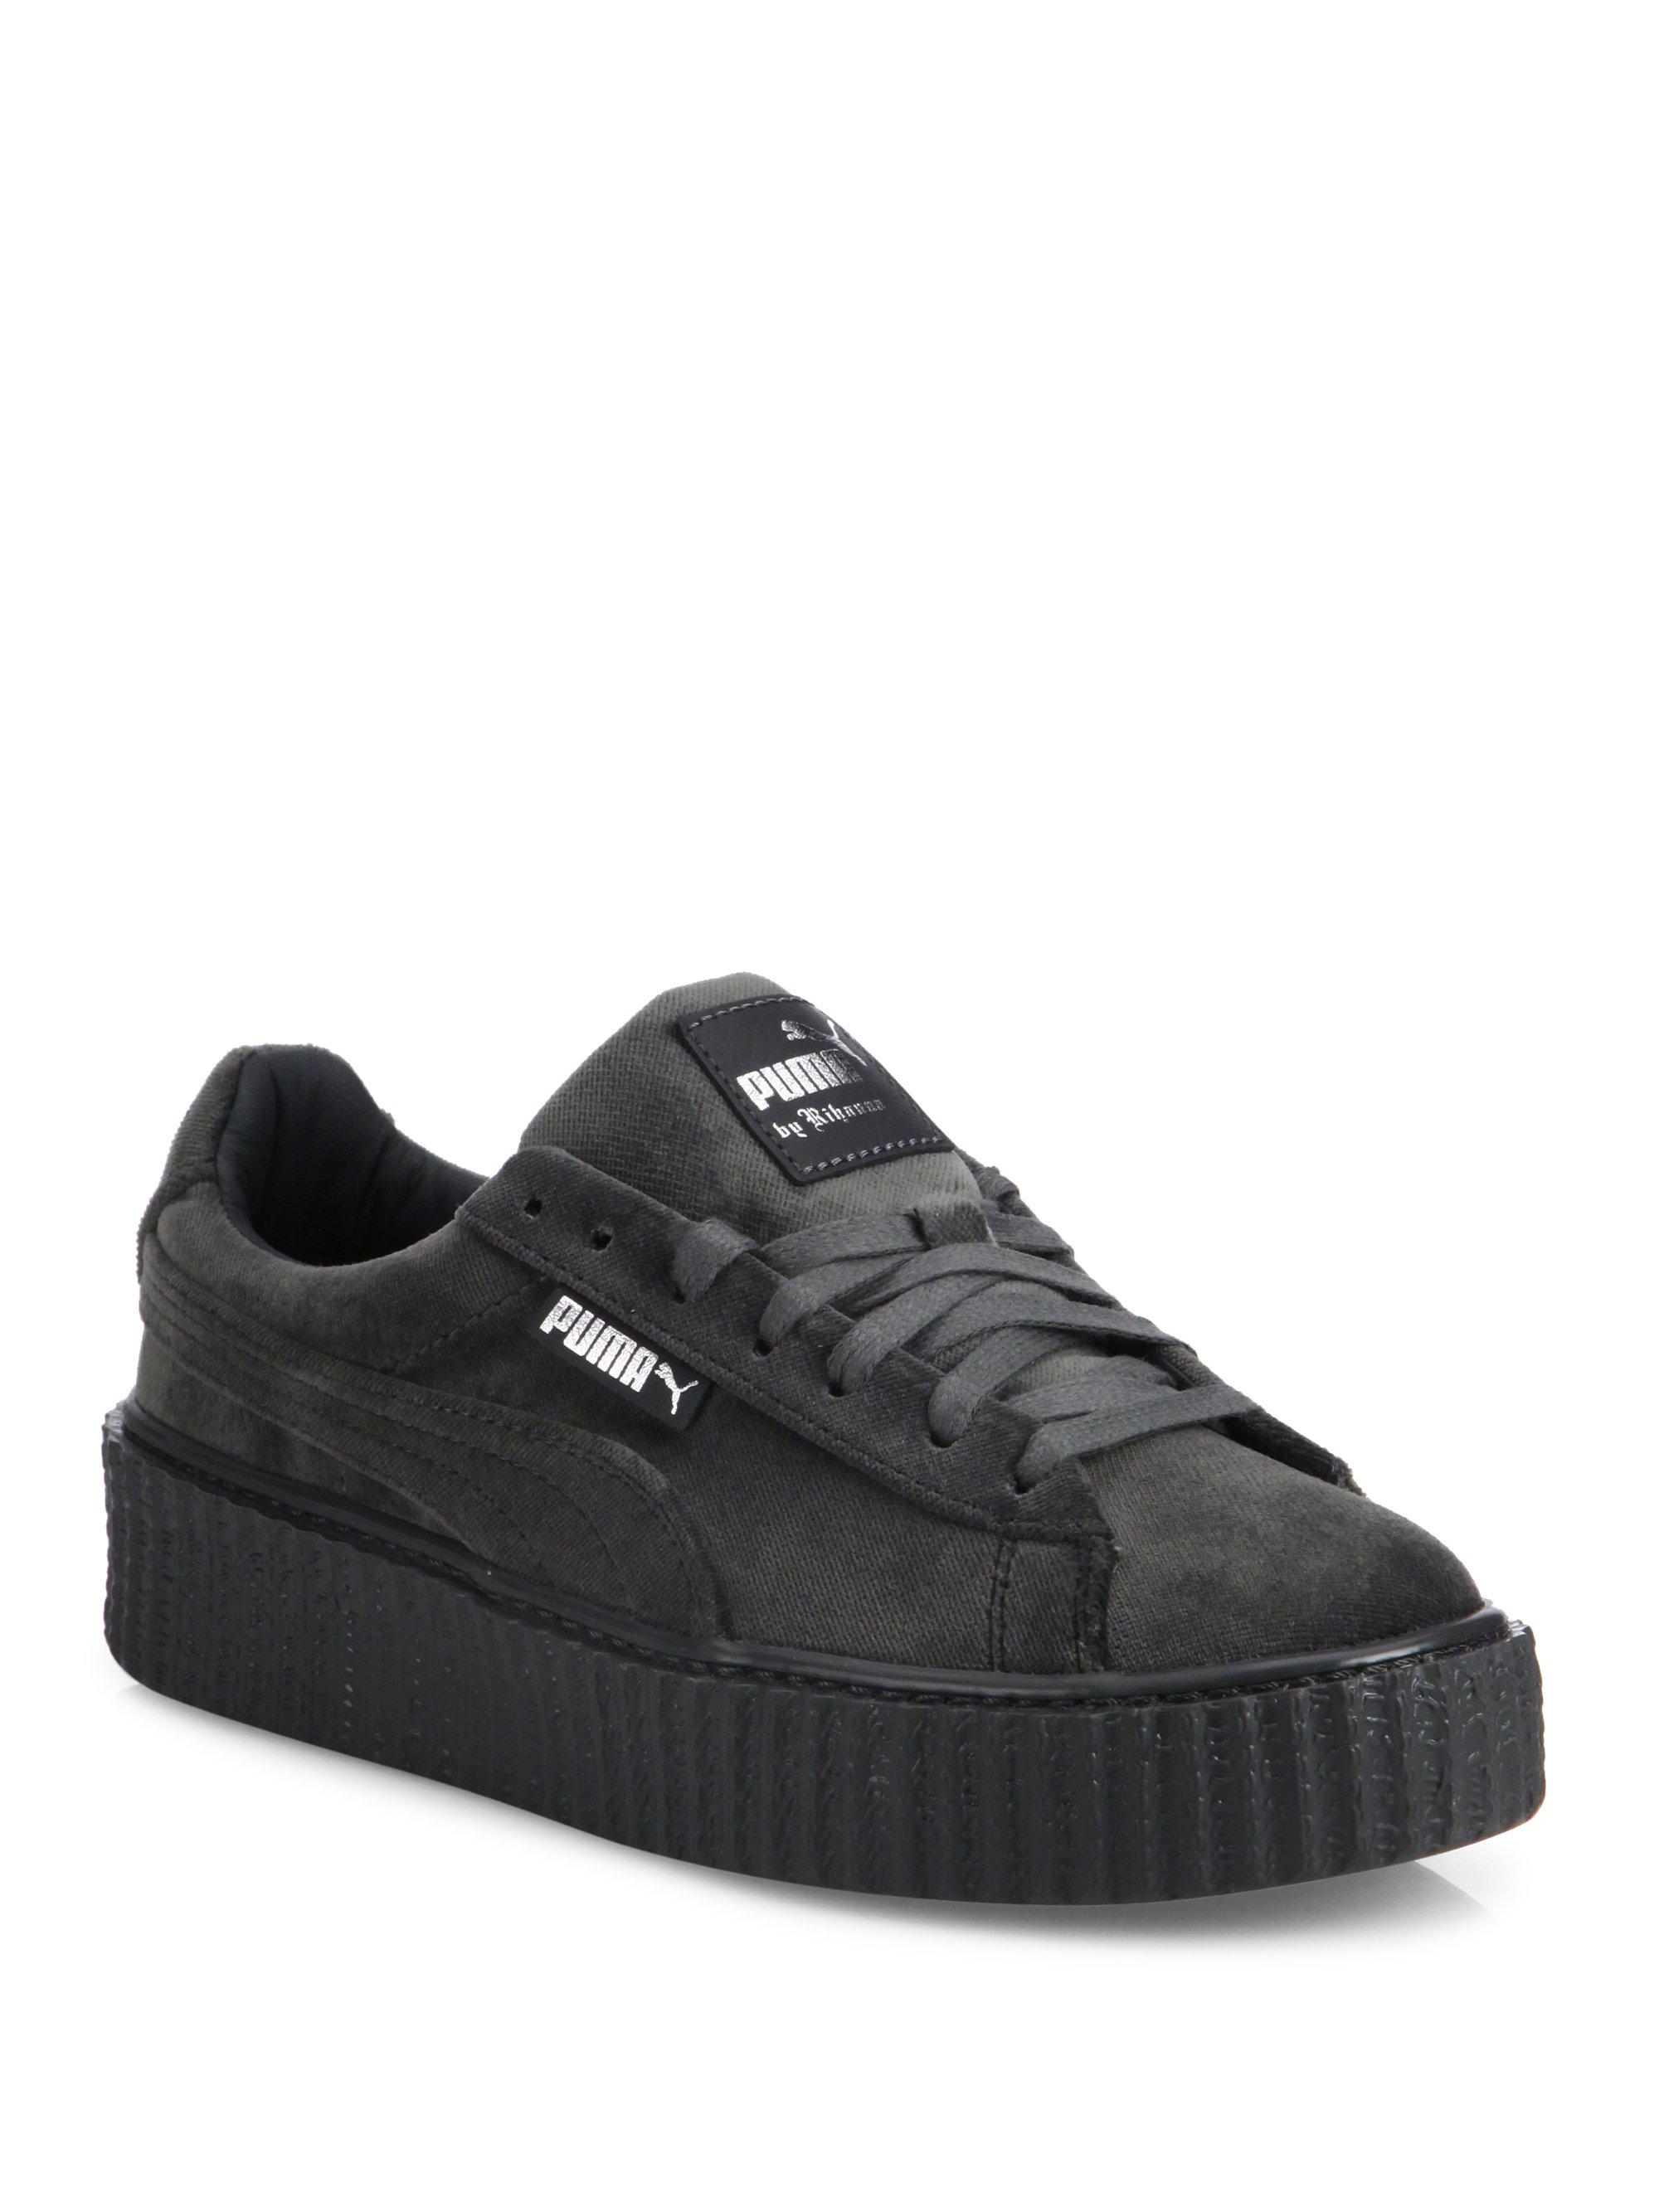 PUMA Fenty X Rihanna Velvet Creeper Platform Sneakers in Grey (Gray) - Lyst